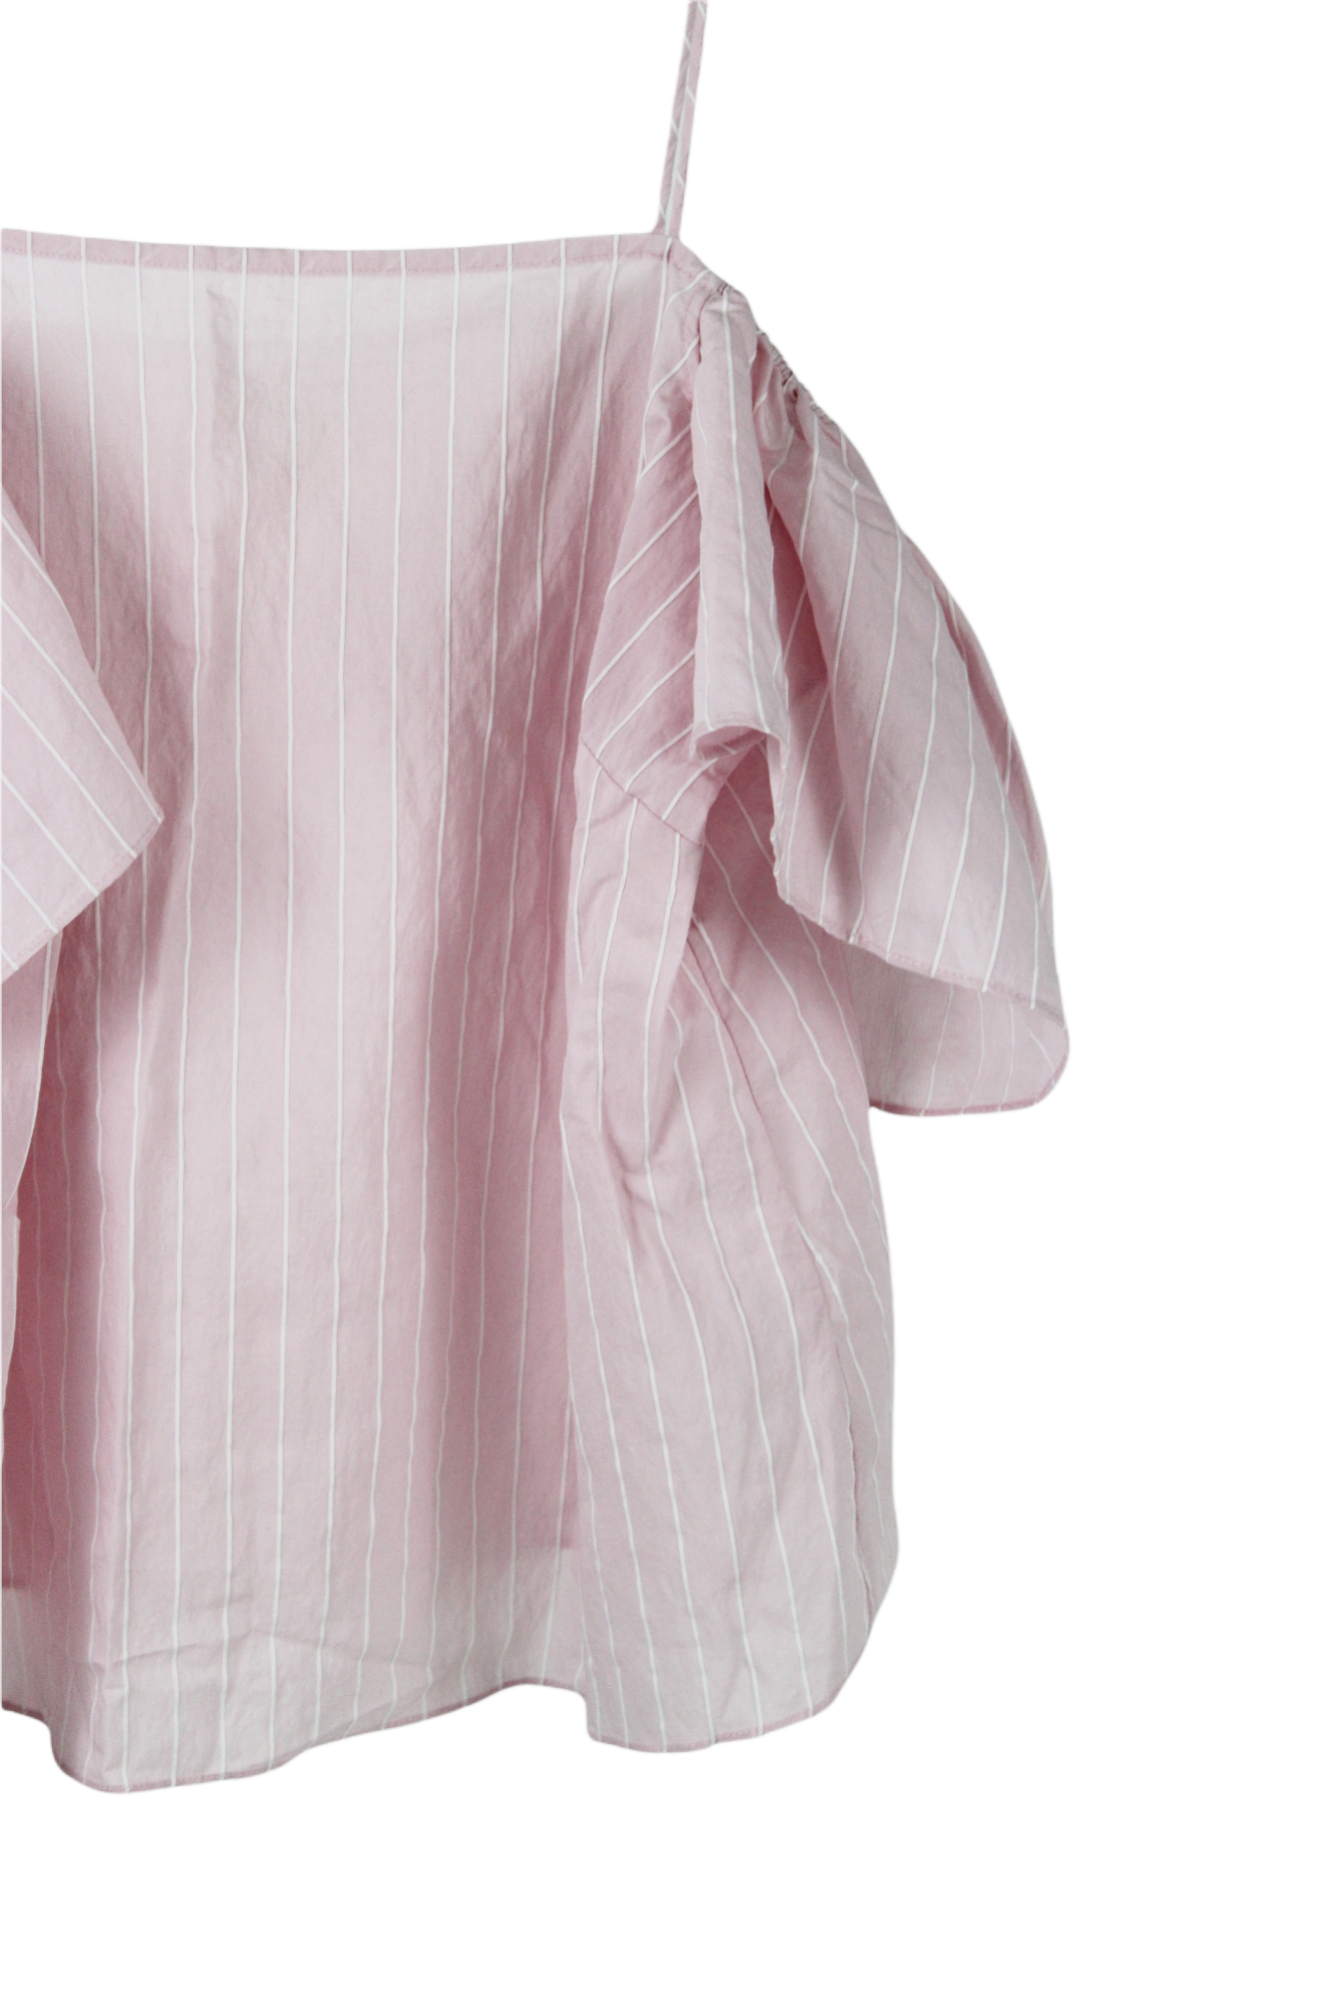 H&M Pink & White Striped Top | 10